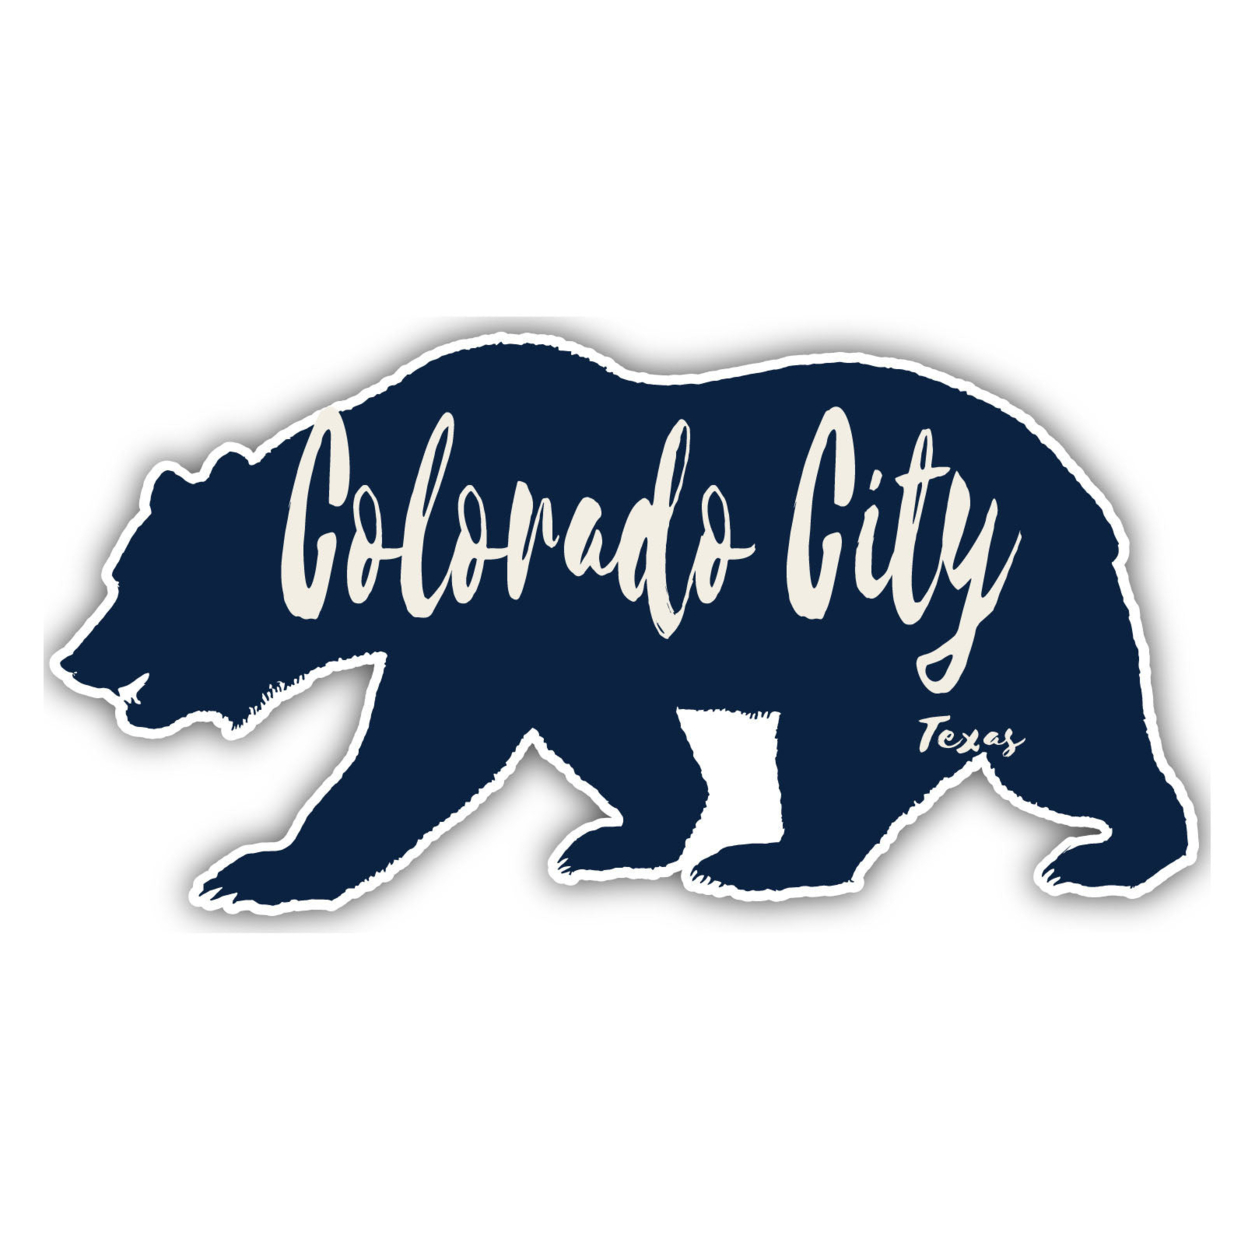 Colorado City Texas Souvenir Decorative Stickers (Choose Theme And Size) - 4-Pack, 10-Inch, Bear